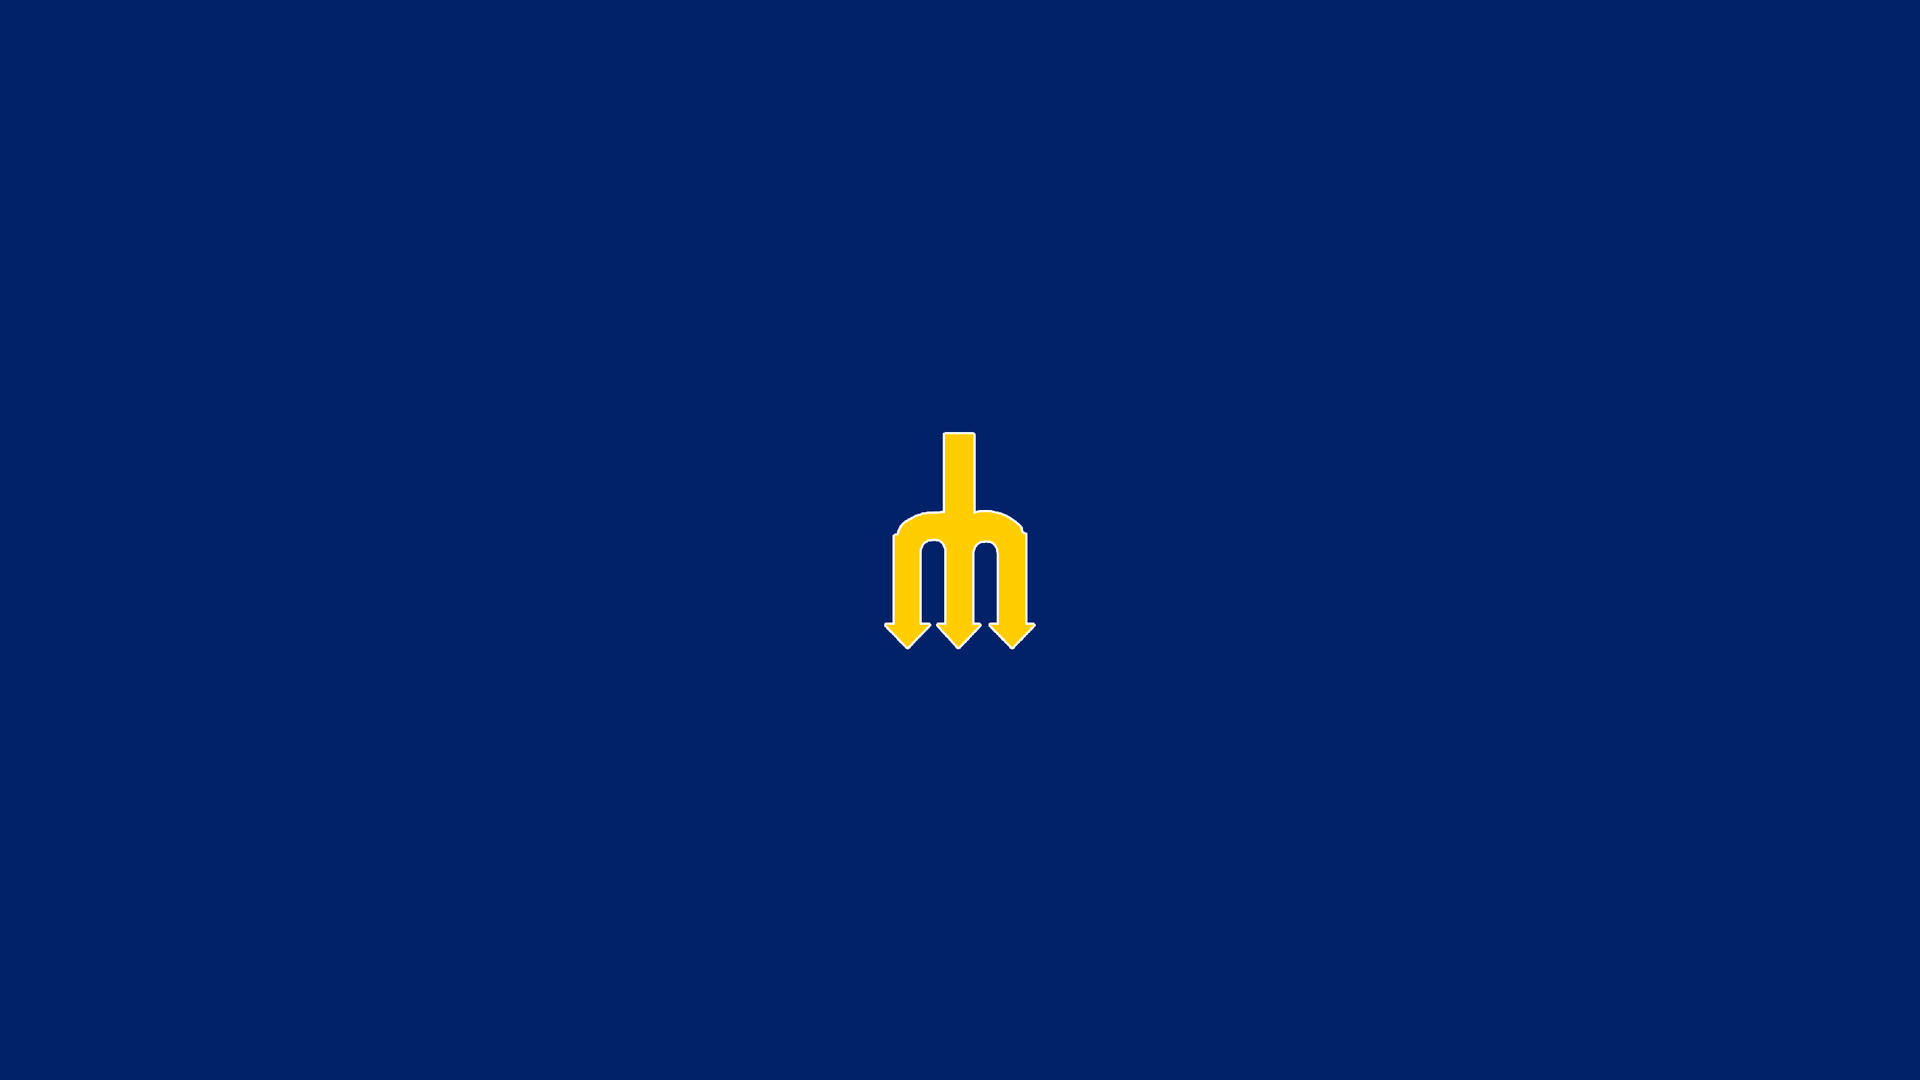 Seattle Mariners Trident-logo Wallpaper